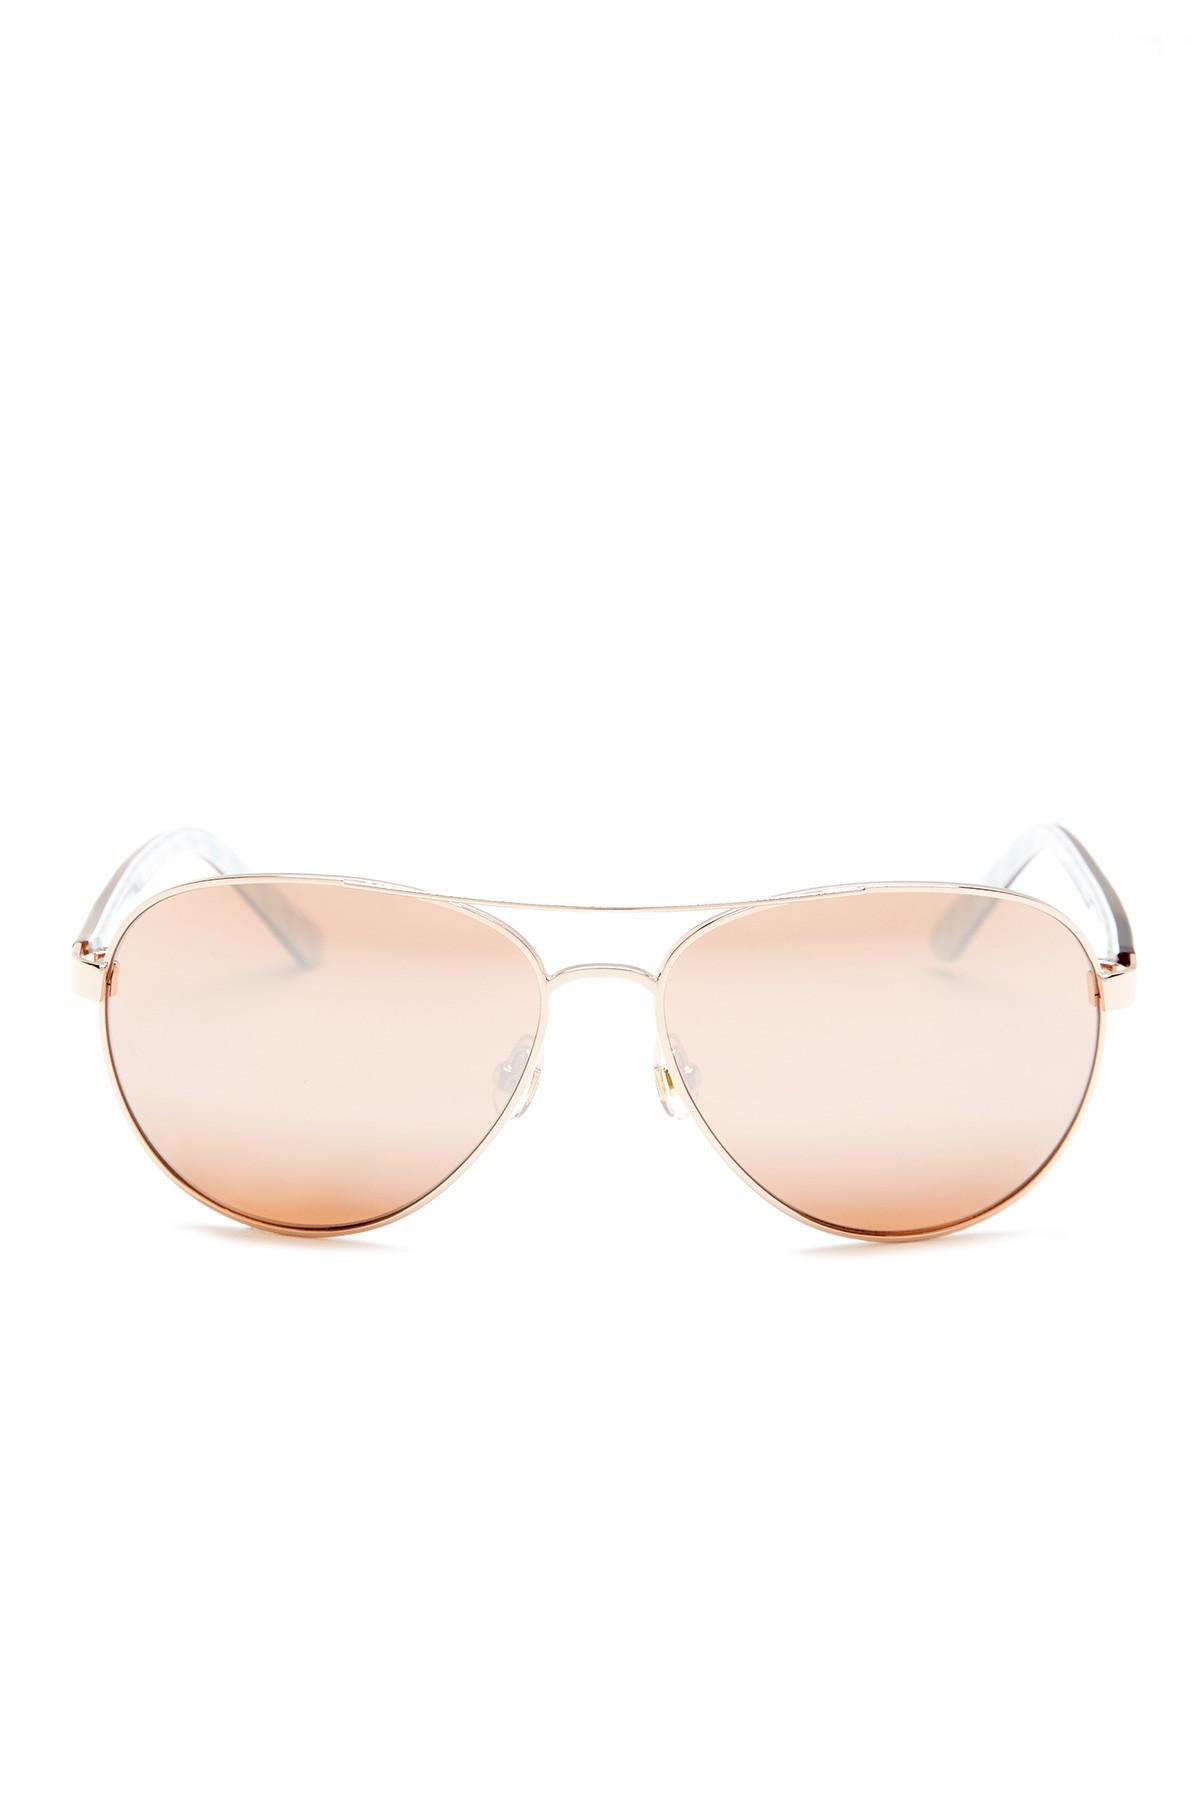 Kate Spade 58mm Blossom Aviator Sunglasses | Lyst